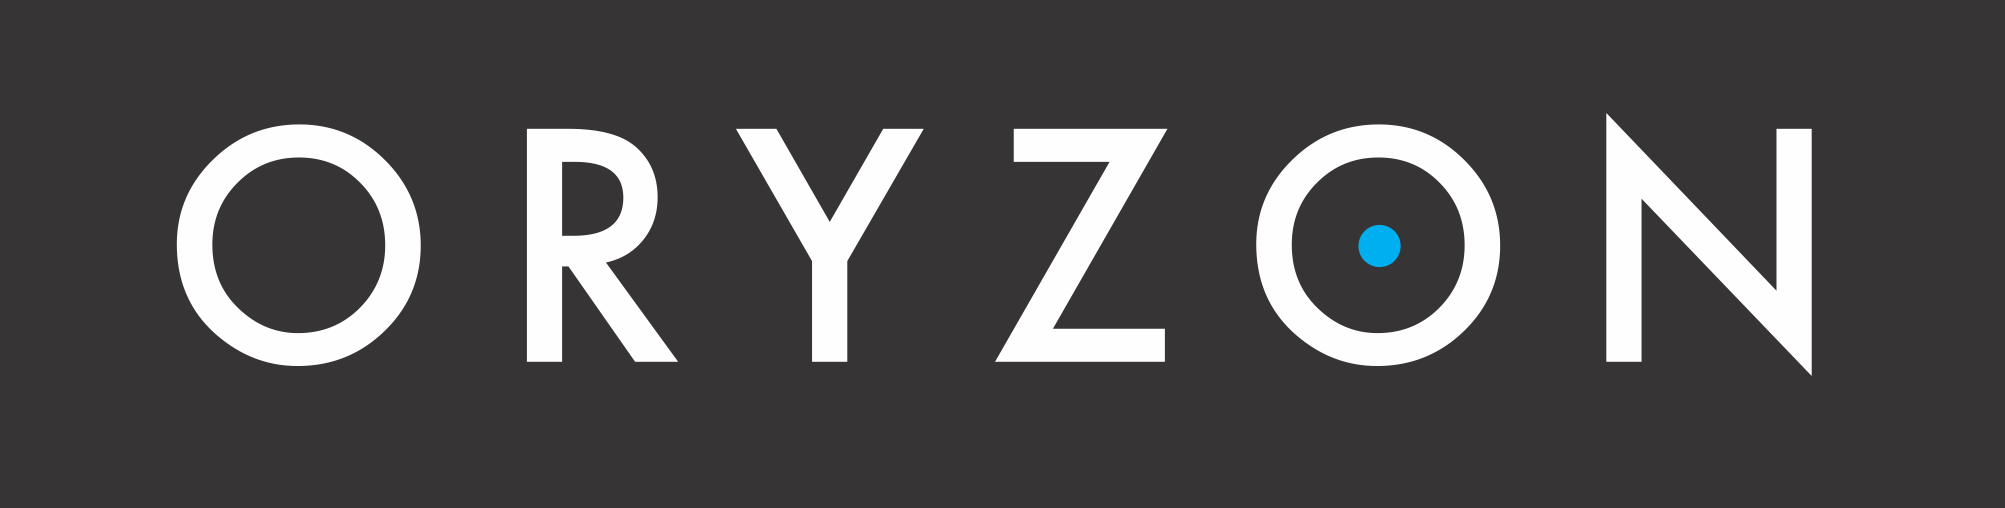 Logotipo oryzon